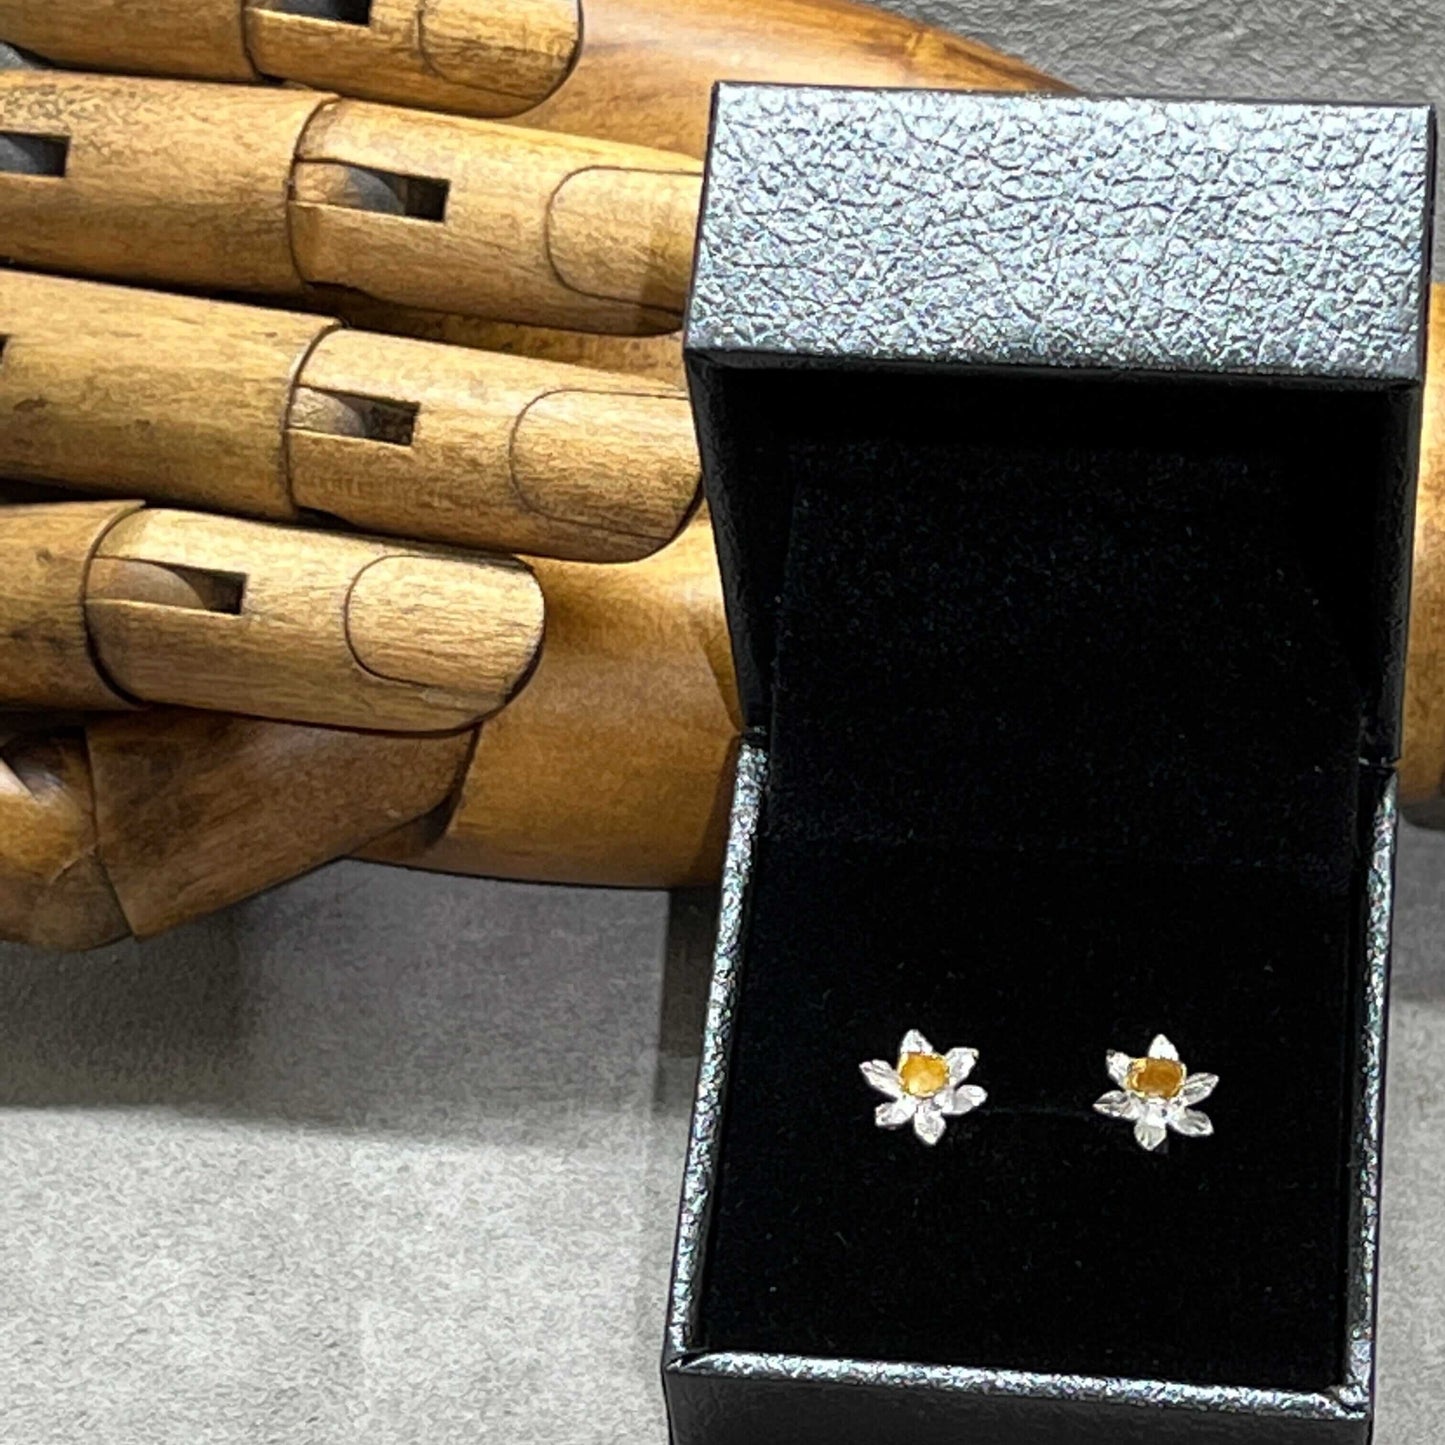 Daffodil Flower Stud Earrings in Sterling Silver & 18 Carat Gold - Twelve Silver Trees